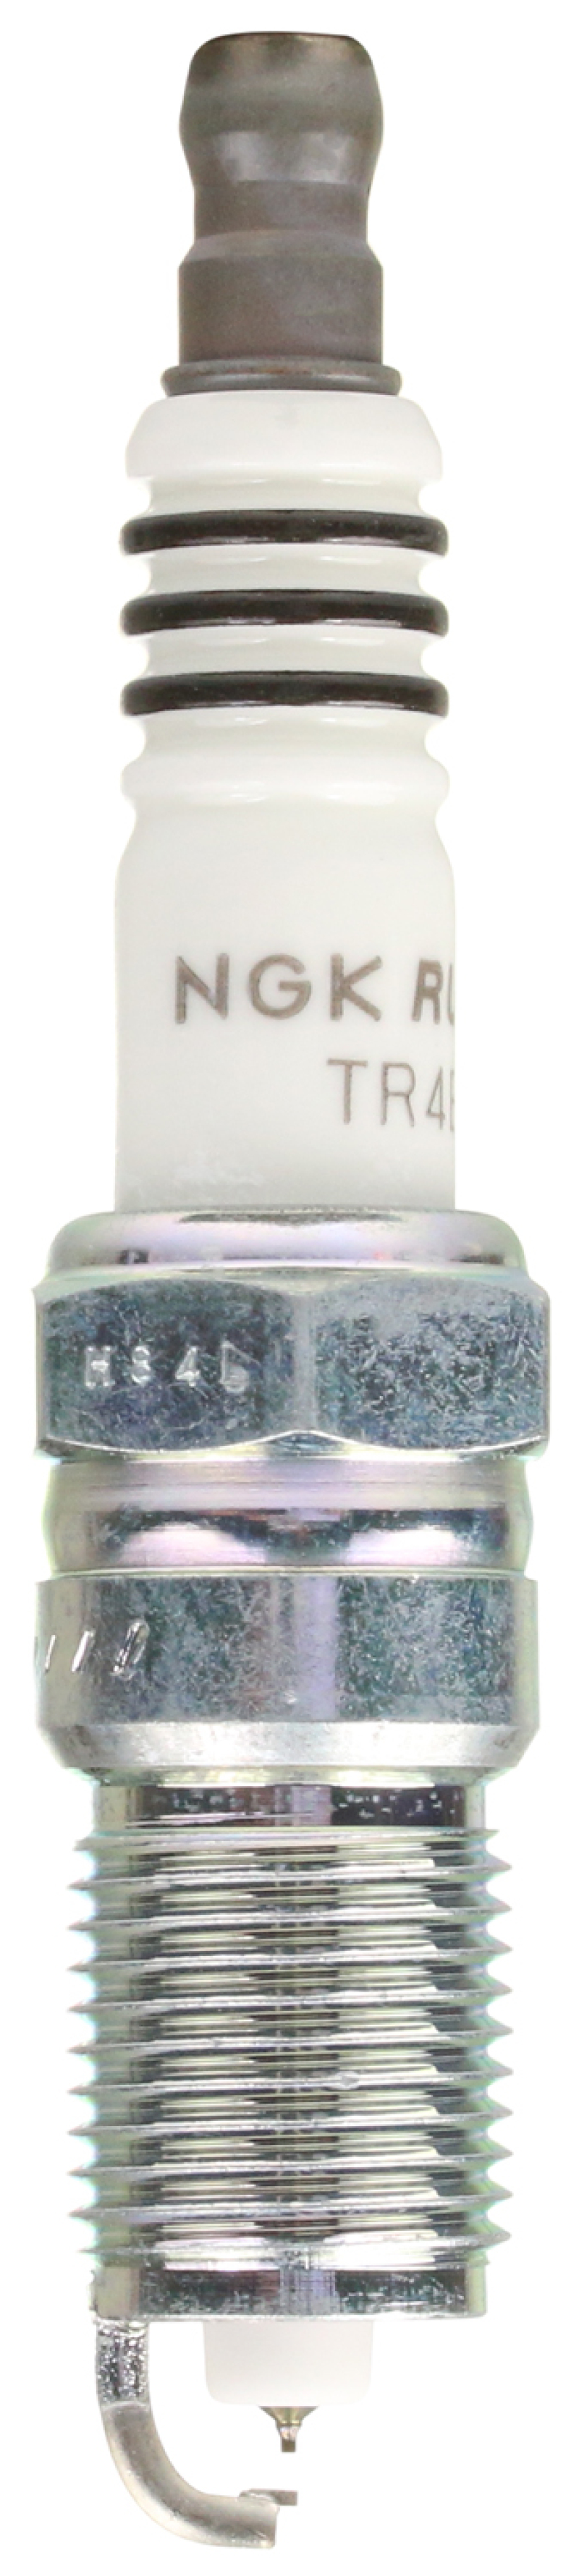 NGK Ruthenium HX Spark Plug Box of 4 (TR4BHX) - 97100